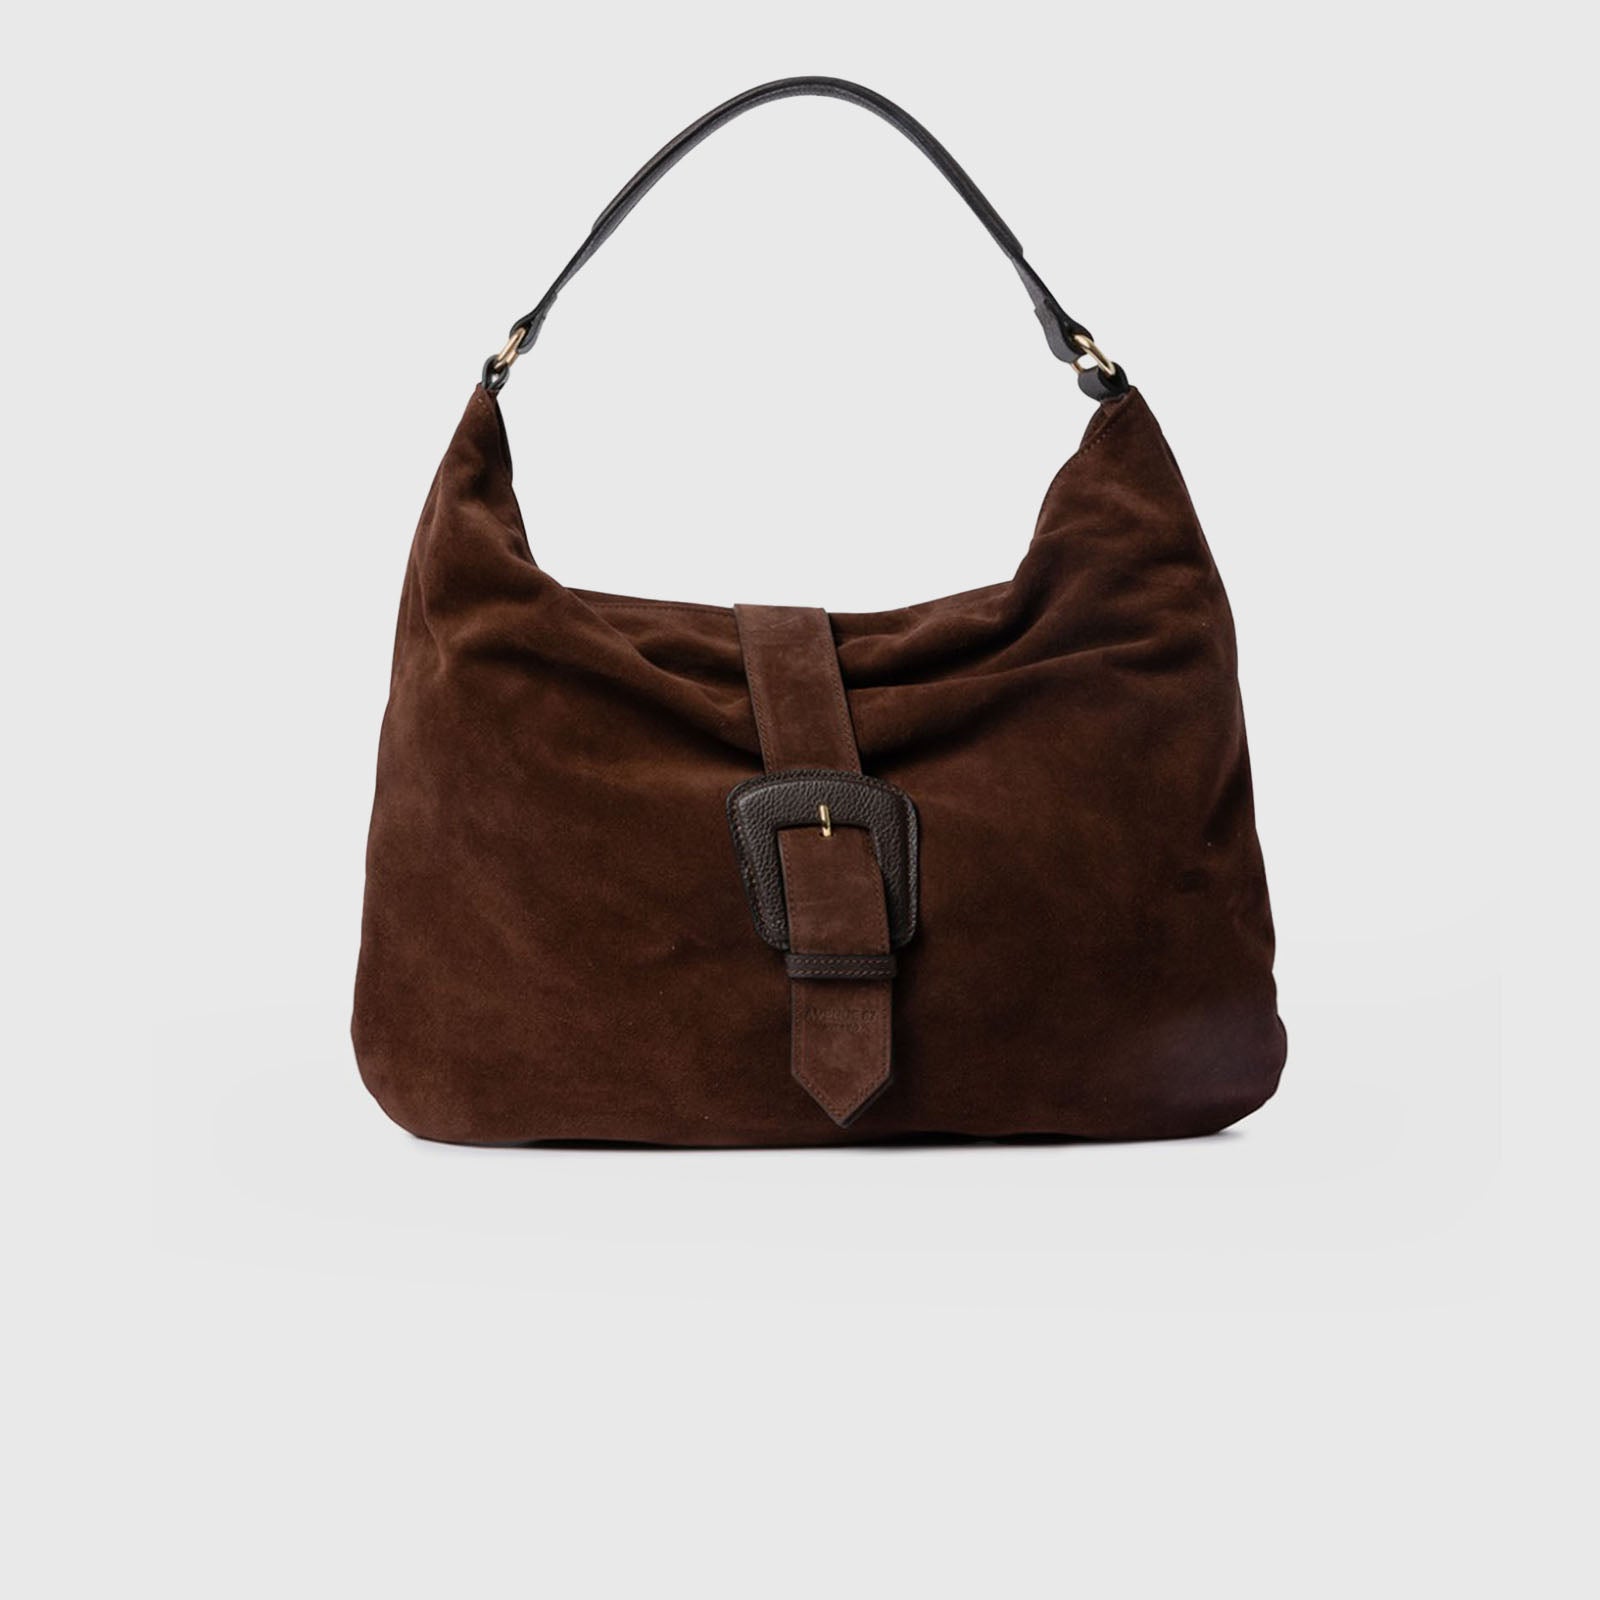 Karen Dark Brown Bag for Women - 3